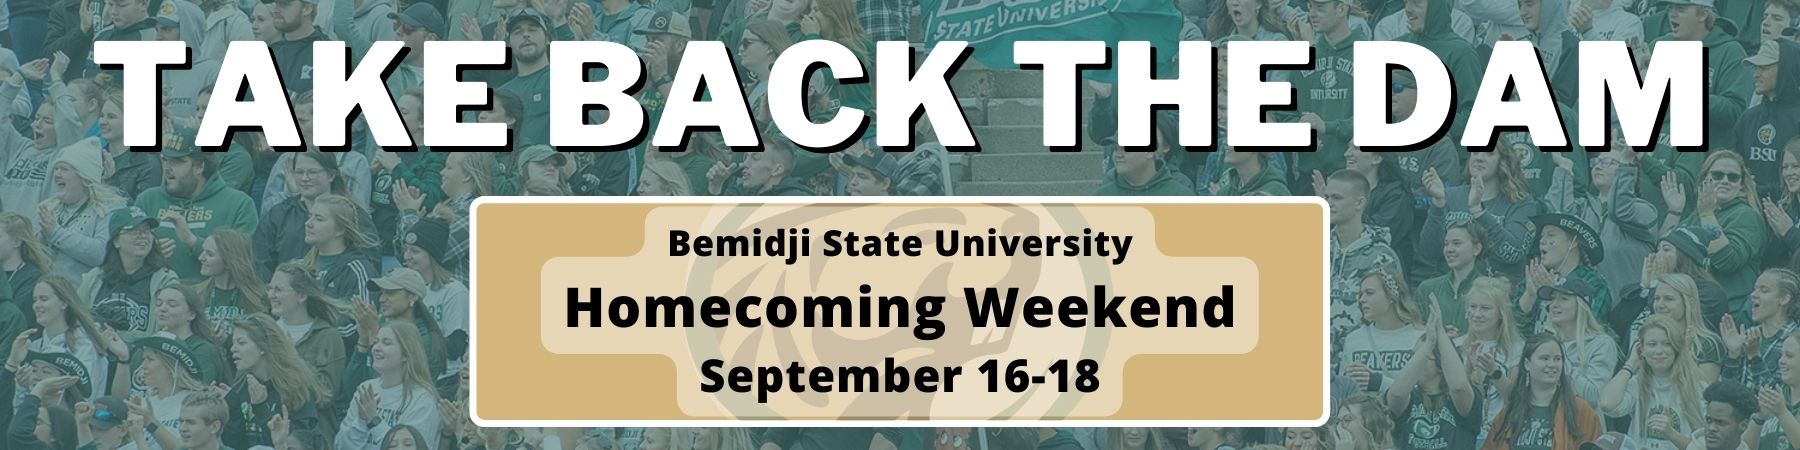 Homecoming Weekend September 16-18 Web banner